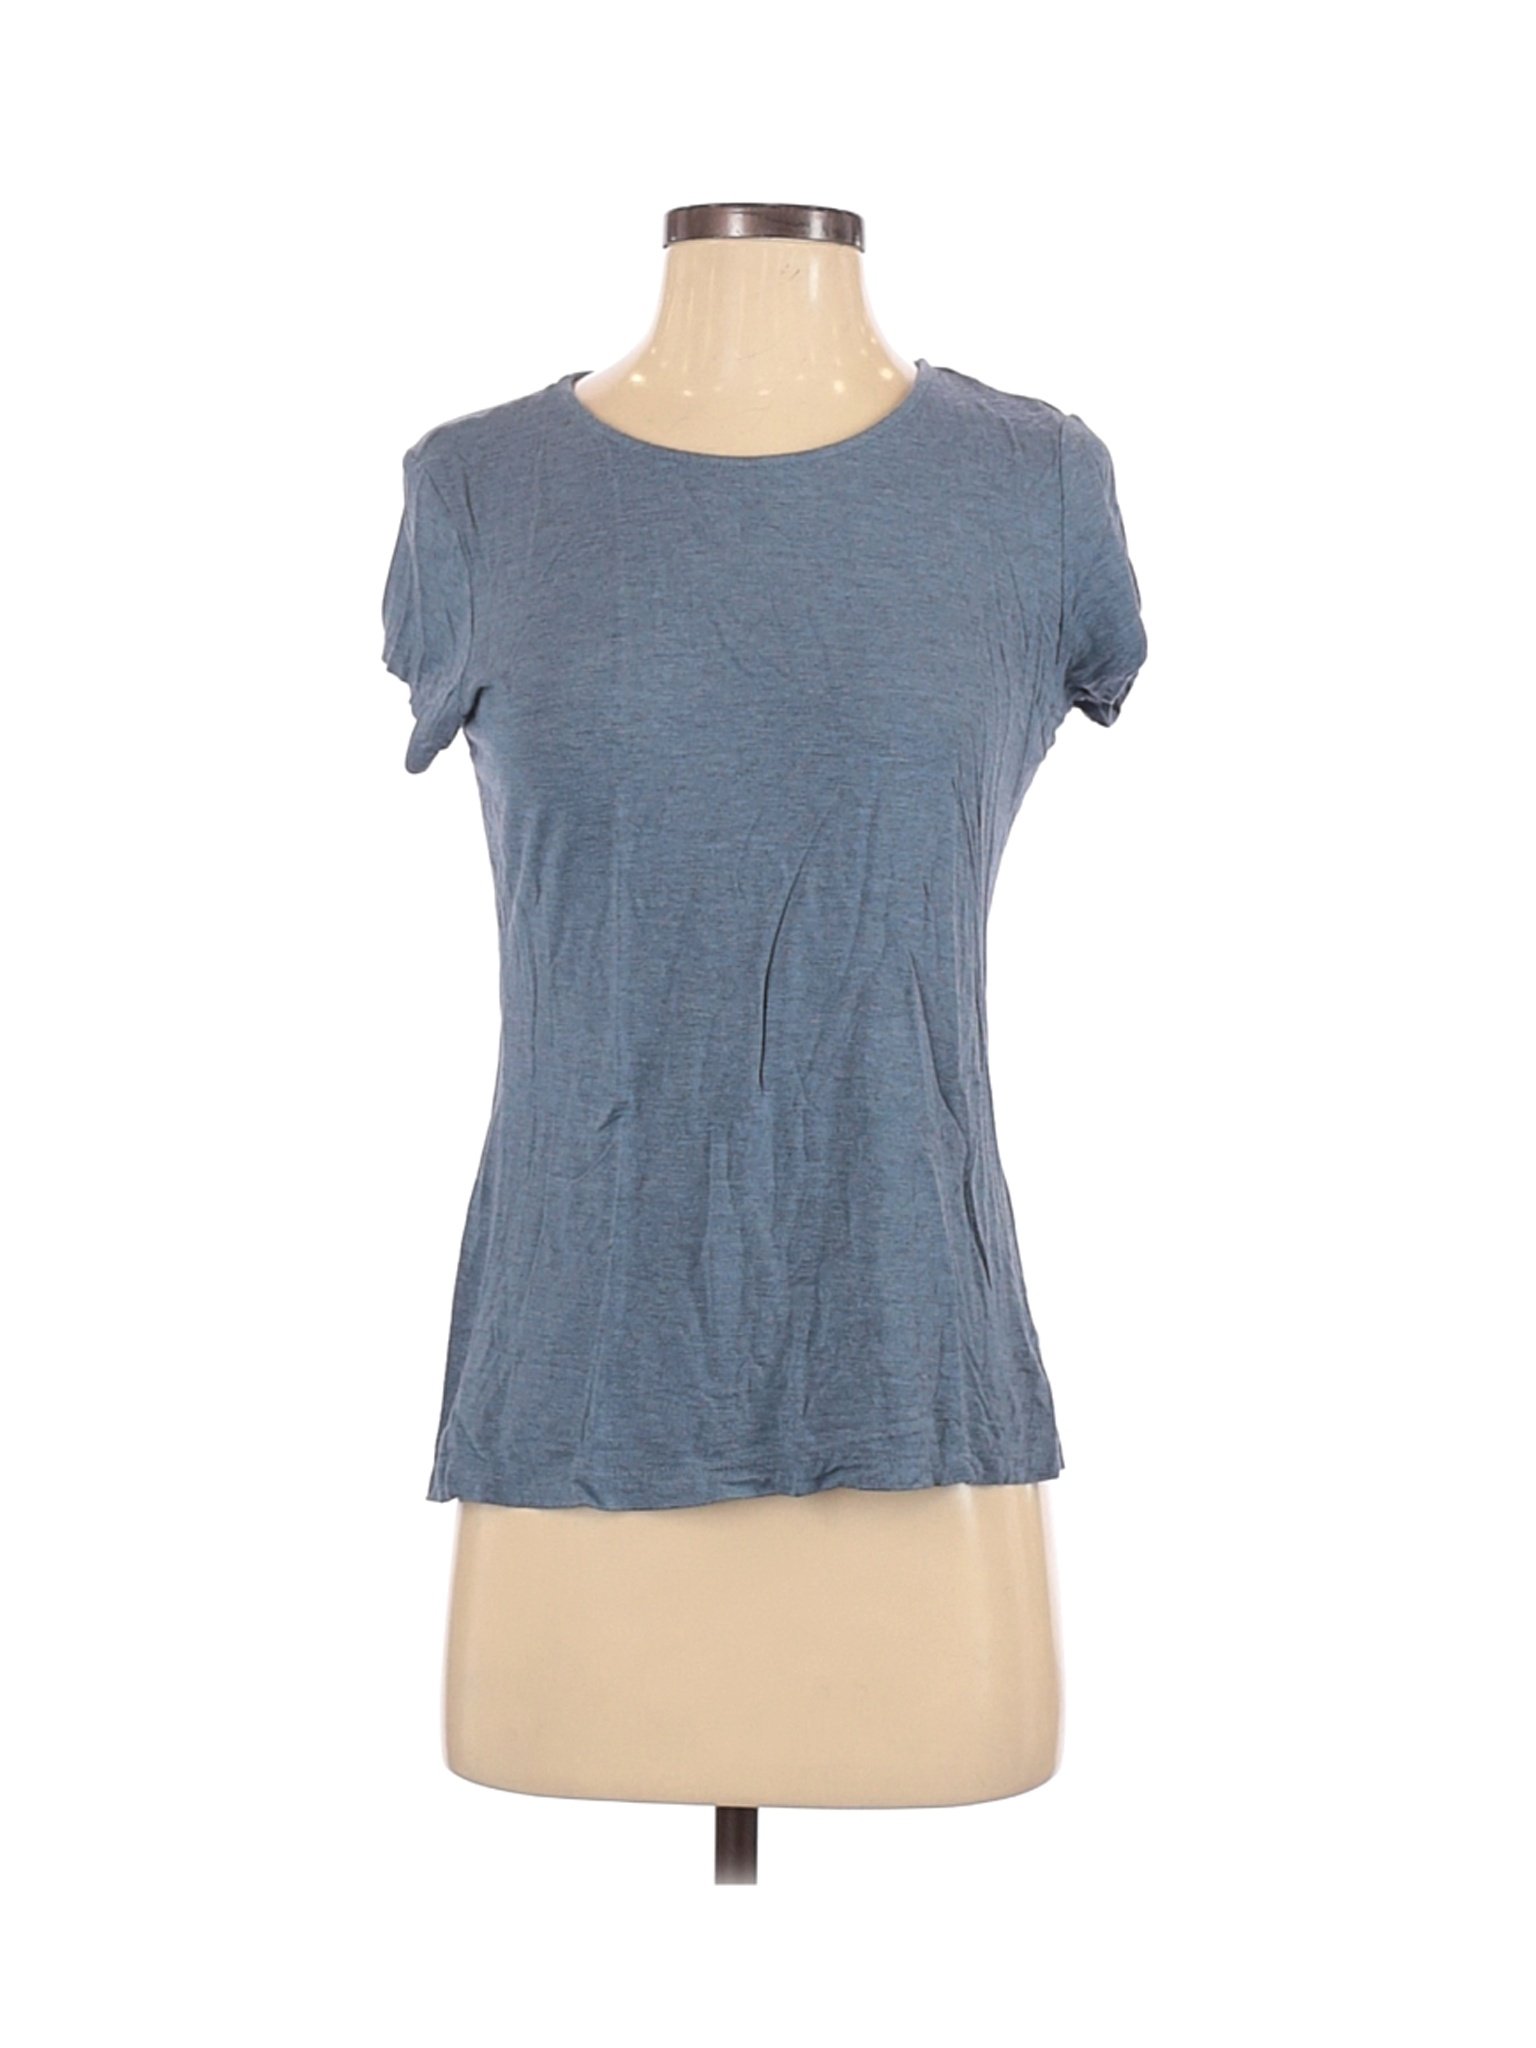 Tahari Women Blue Short Sleeve T-Shirt S | eBay